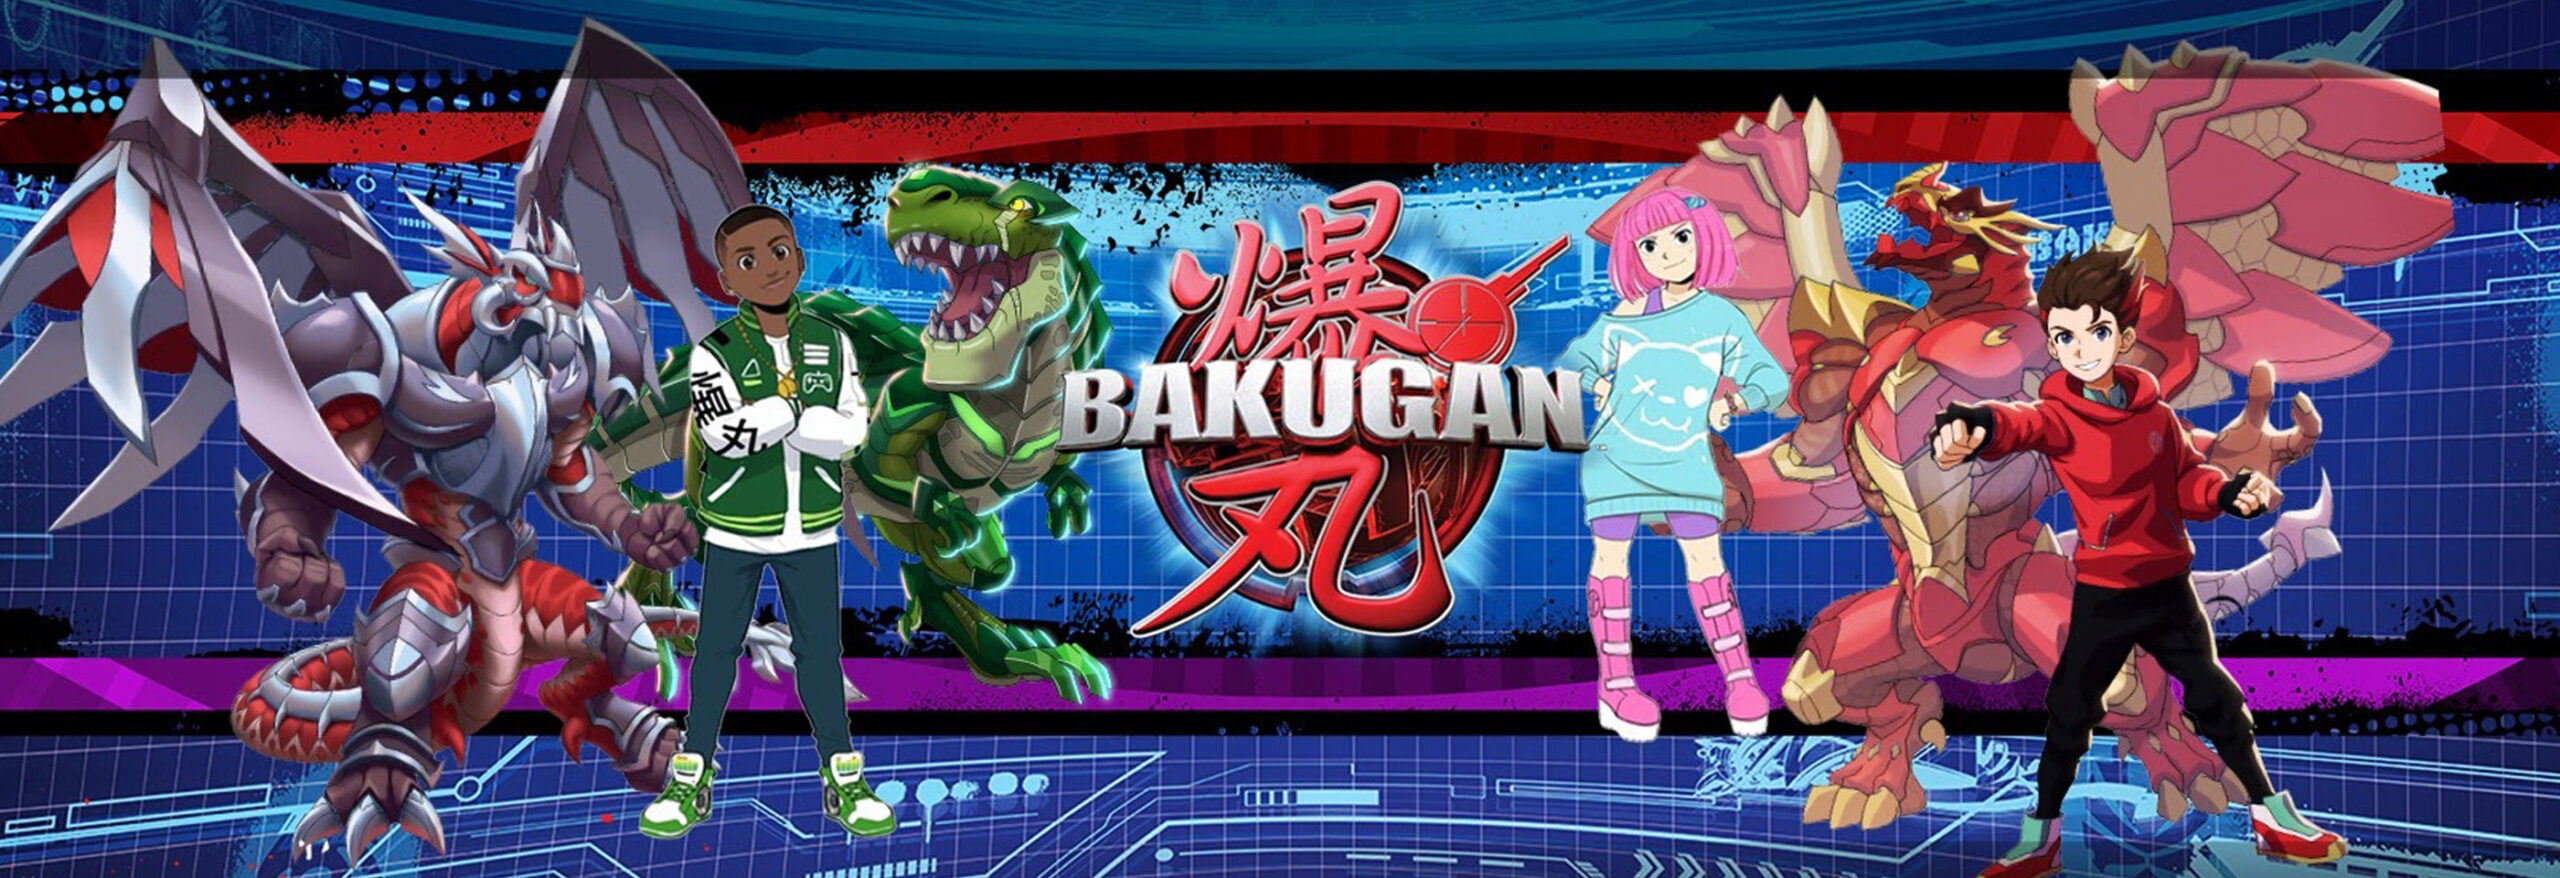 Explore Bakugan Toys, Videos & More